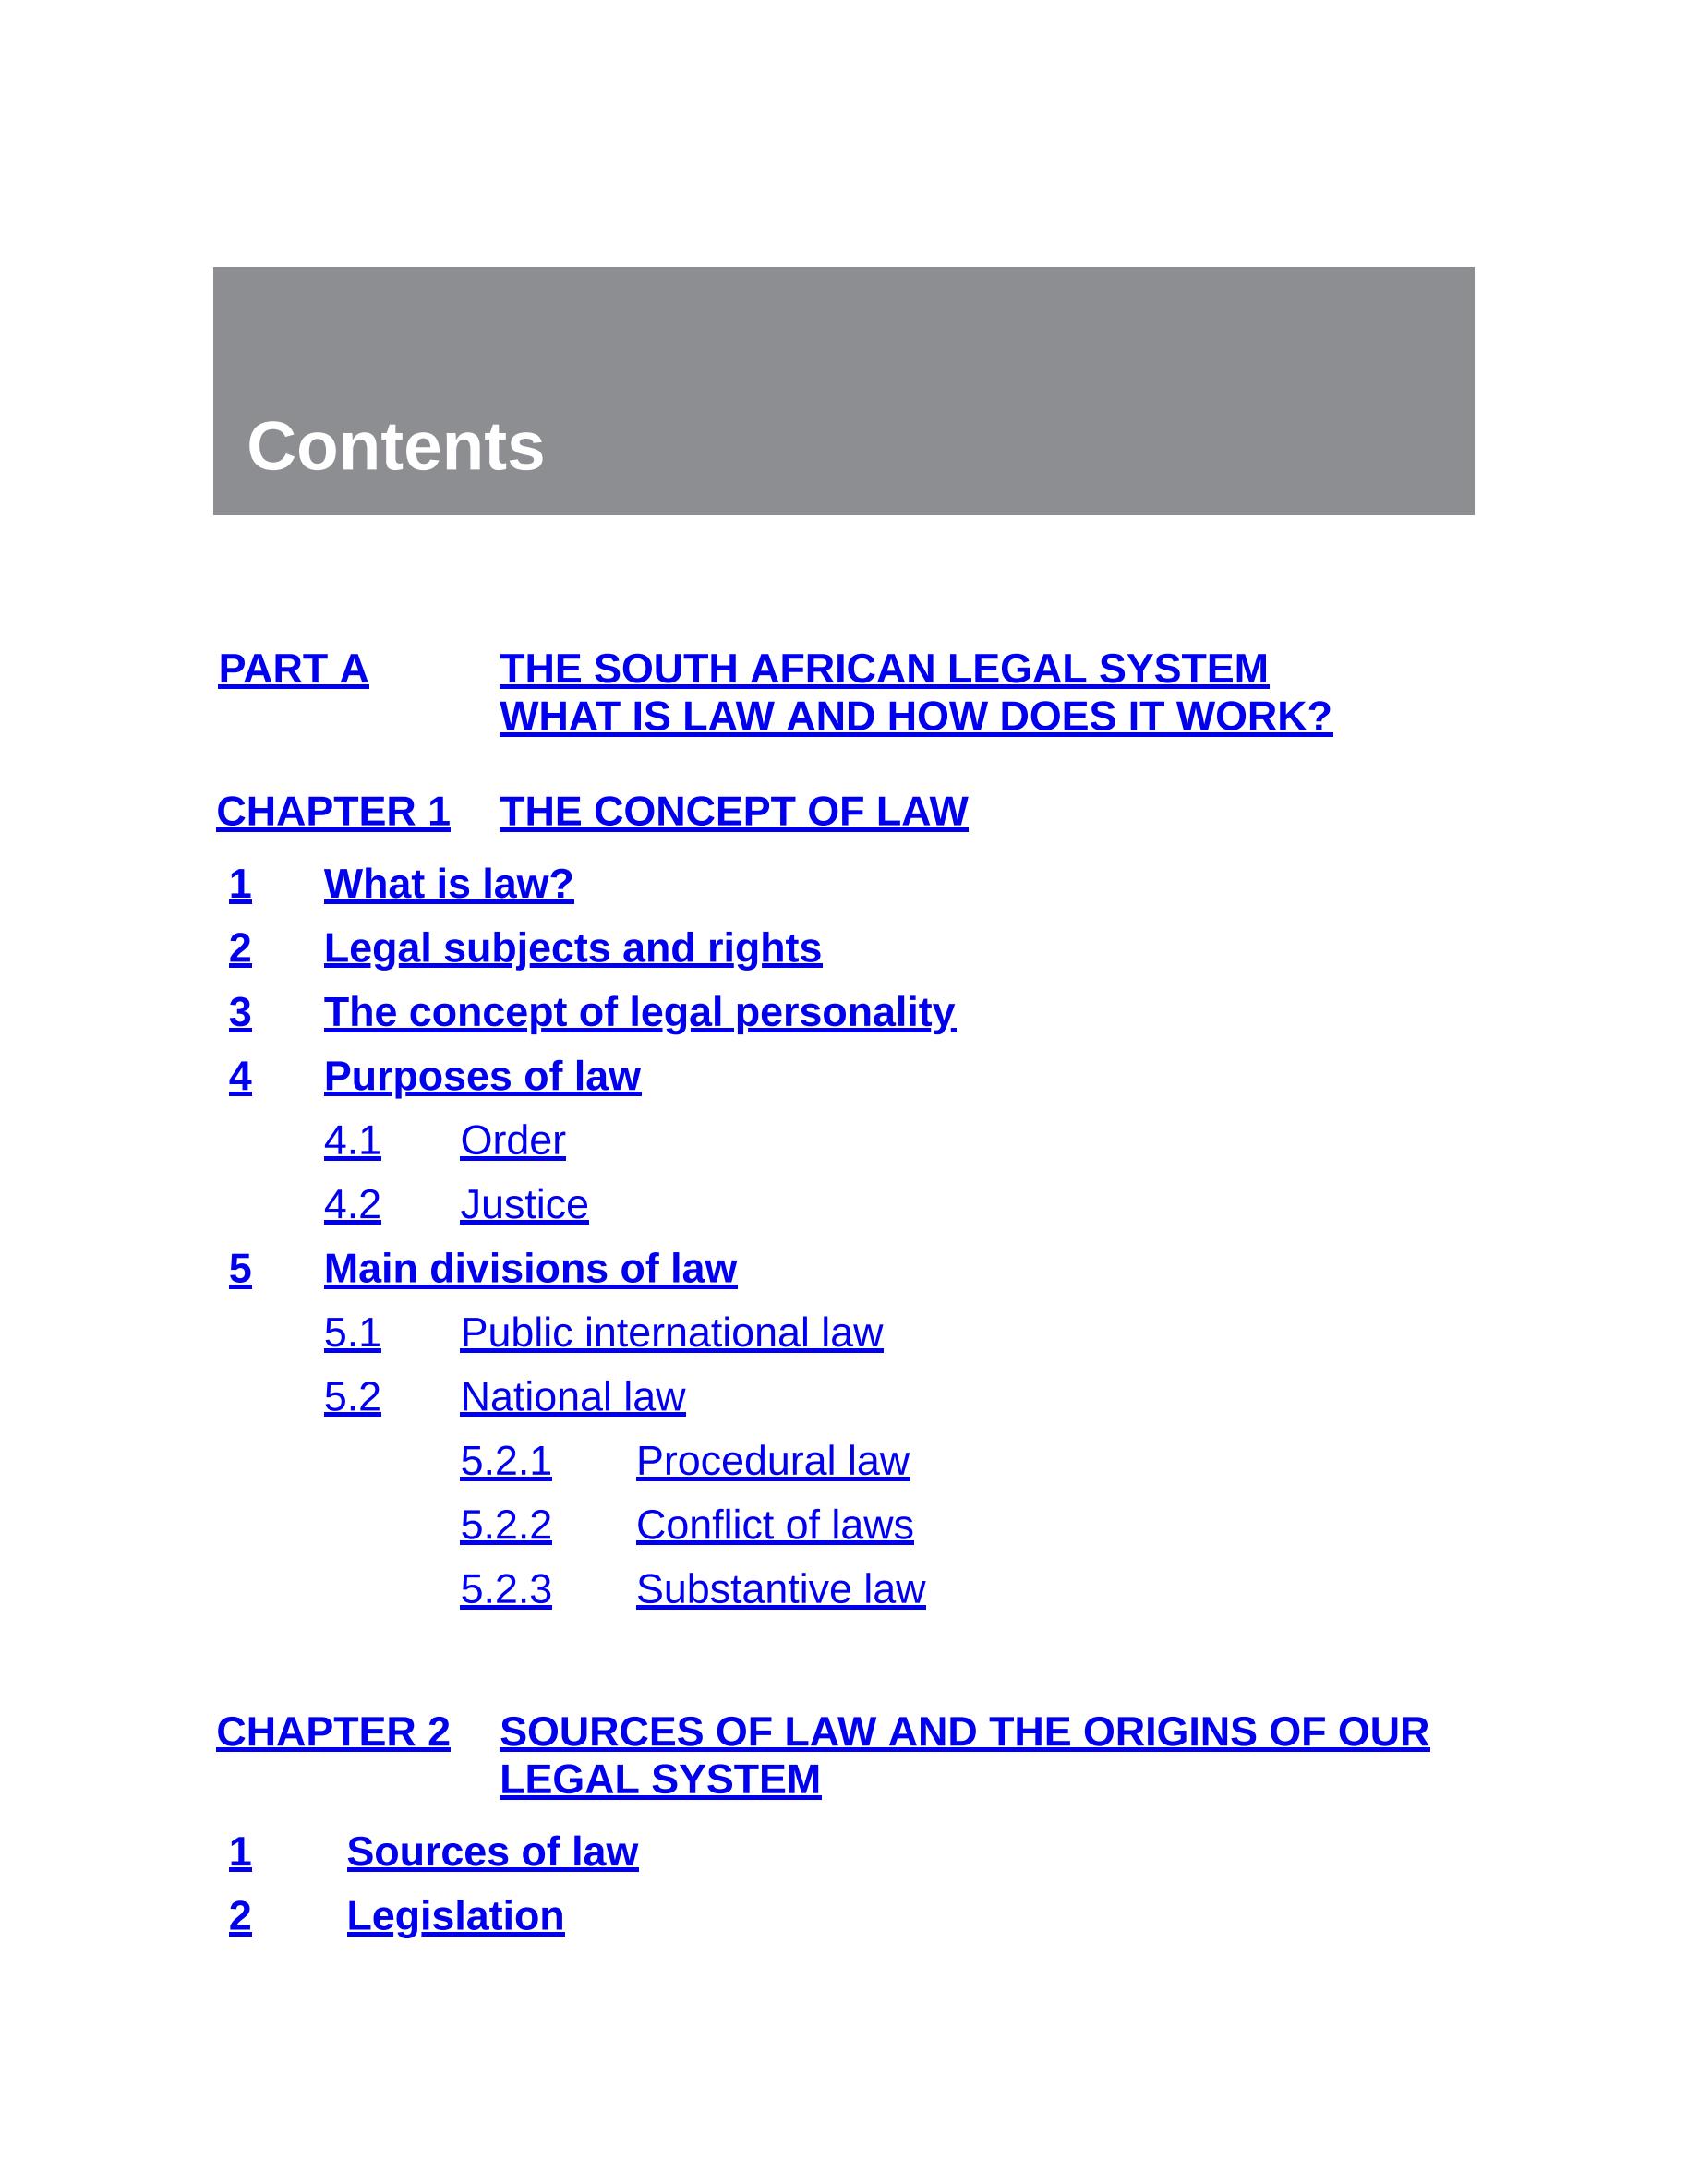 business law textbook pdf